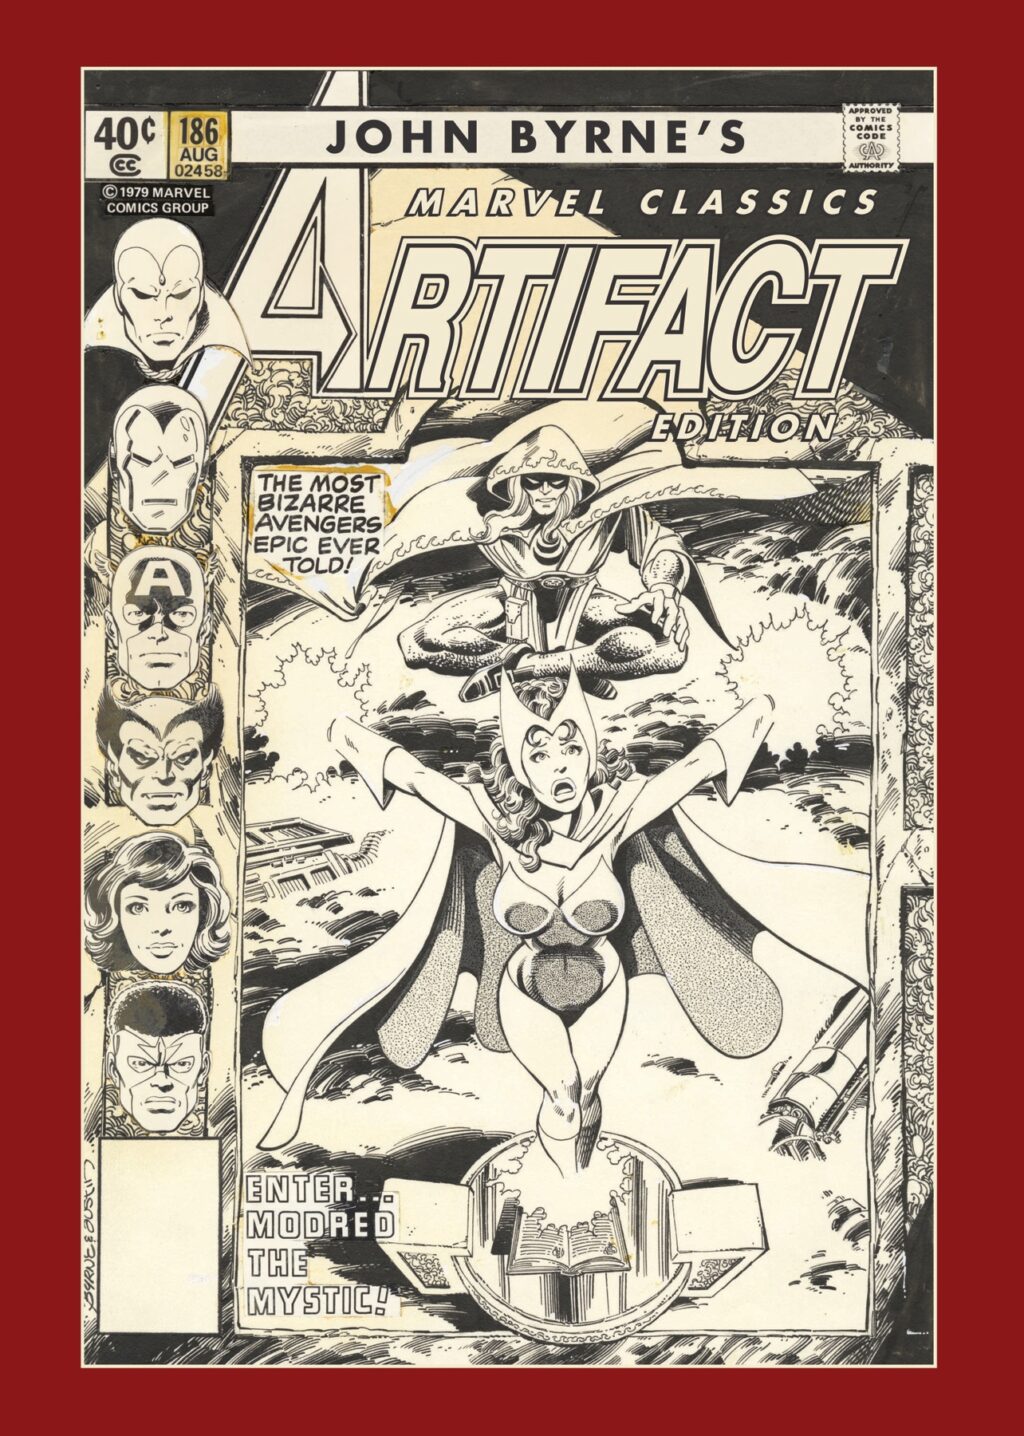 John Byrne's Marvel Classics Artifact Edition cover prelim